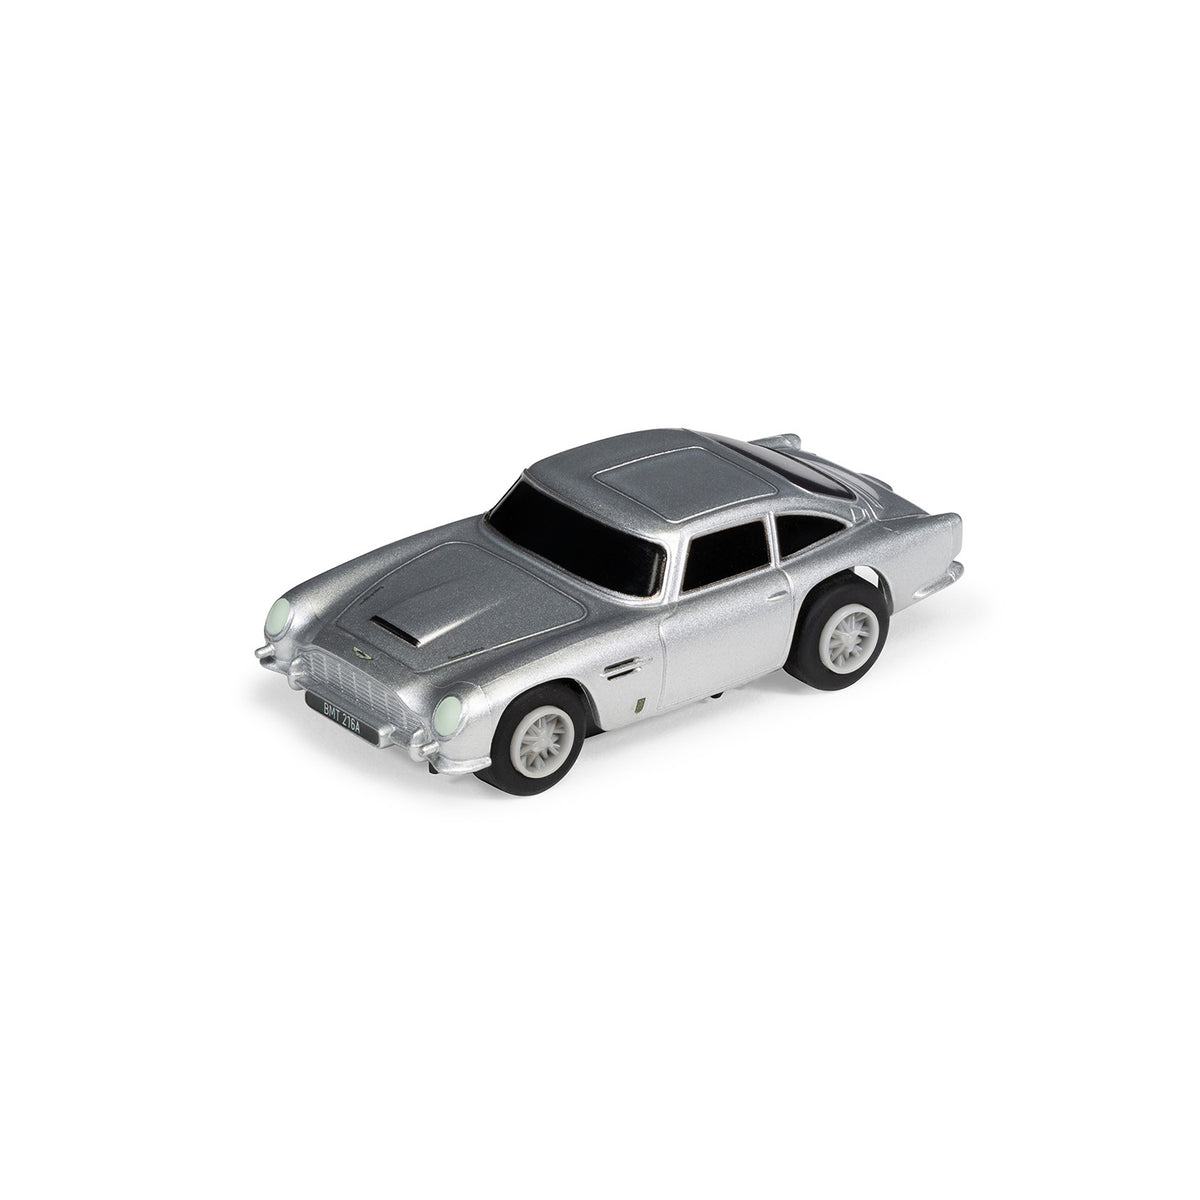 Scalextric James Bond Aston Martin DB5 Micro Slot Car - Goldfinger Edition  (Pre-order)